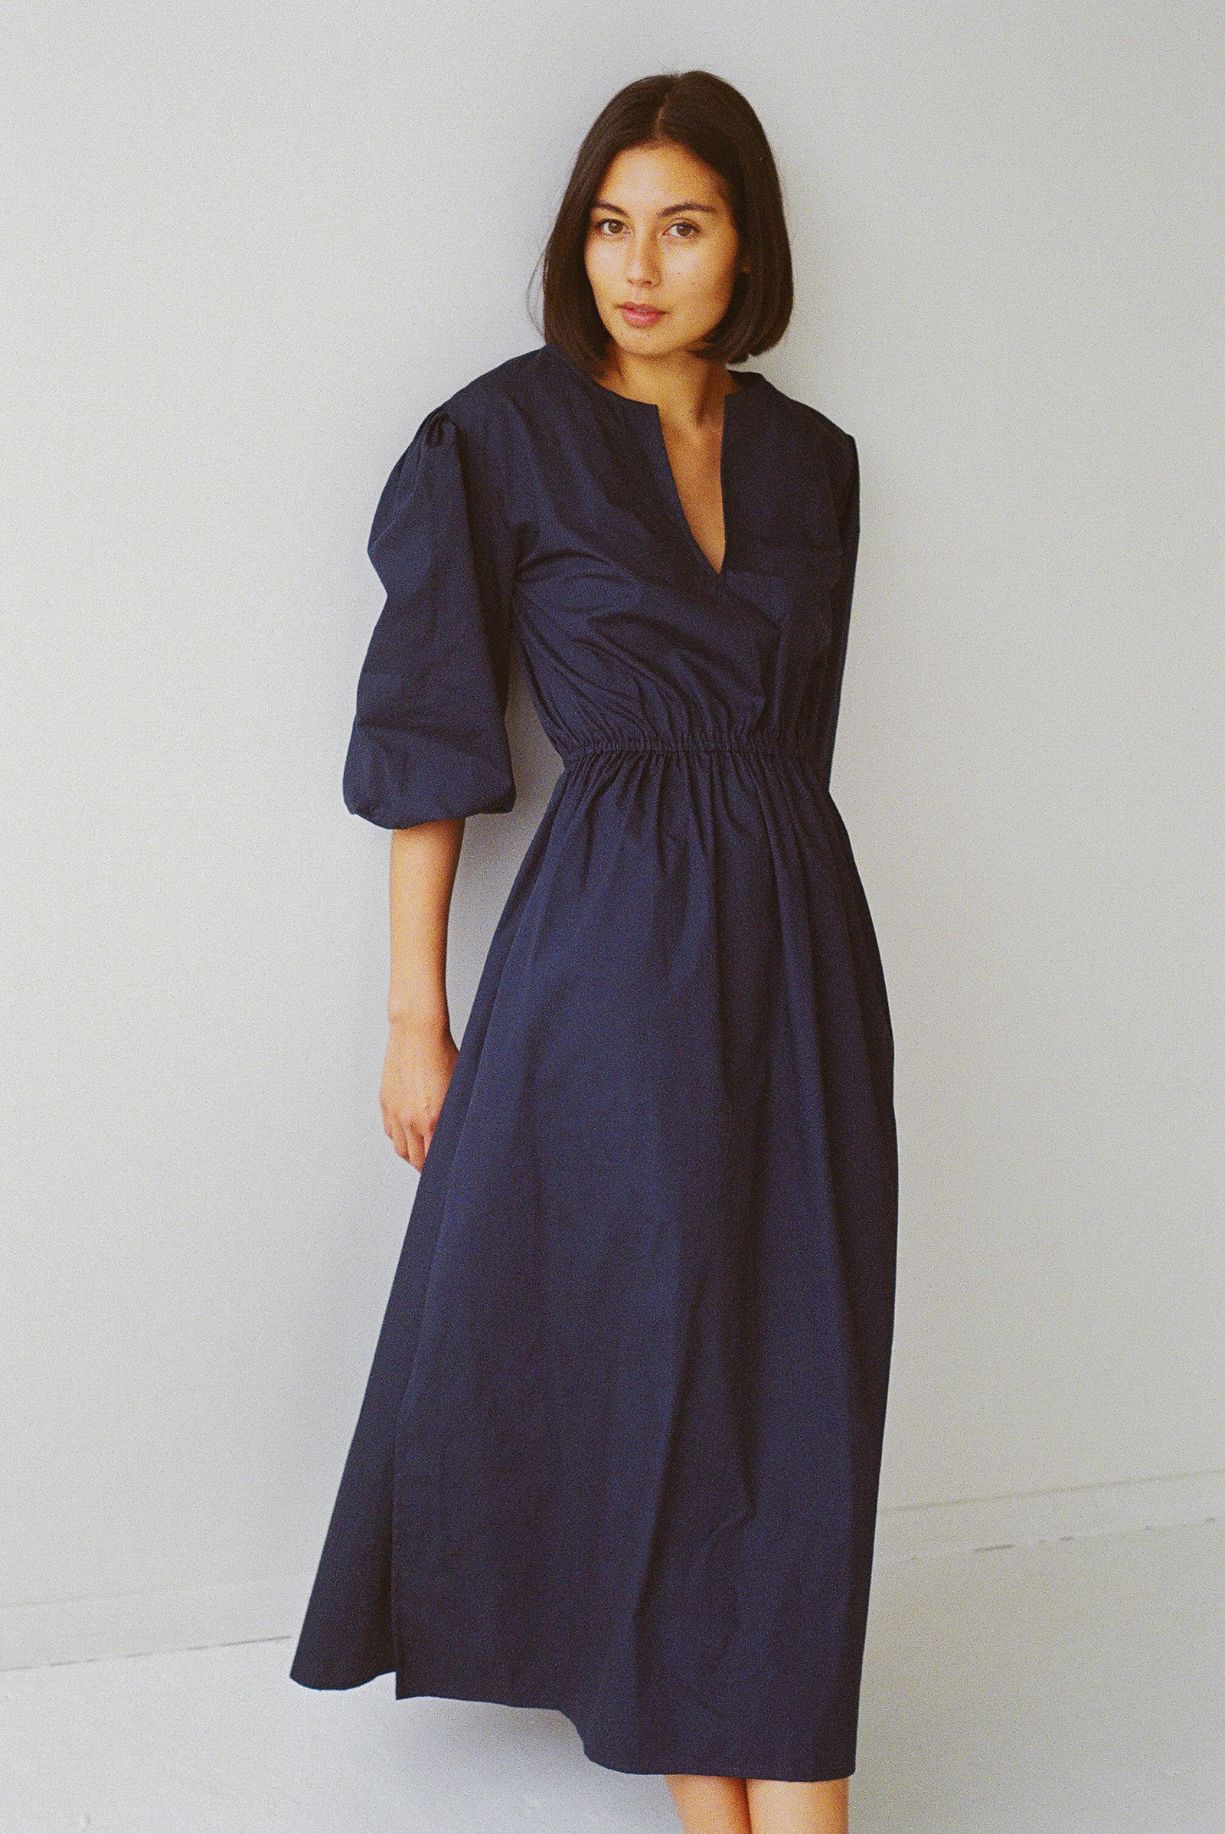 Klein maxi dress navy cotton - Ellis Label - New Zealand womens designer clothing_0004_83070004